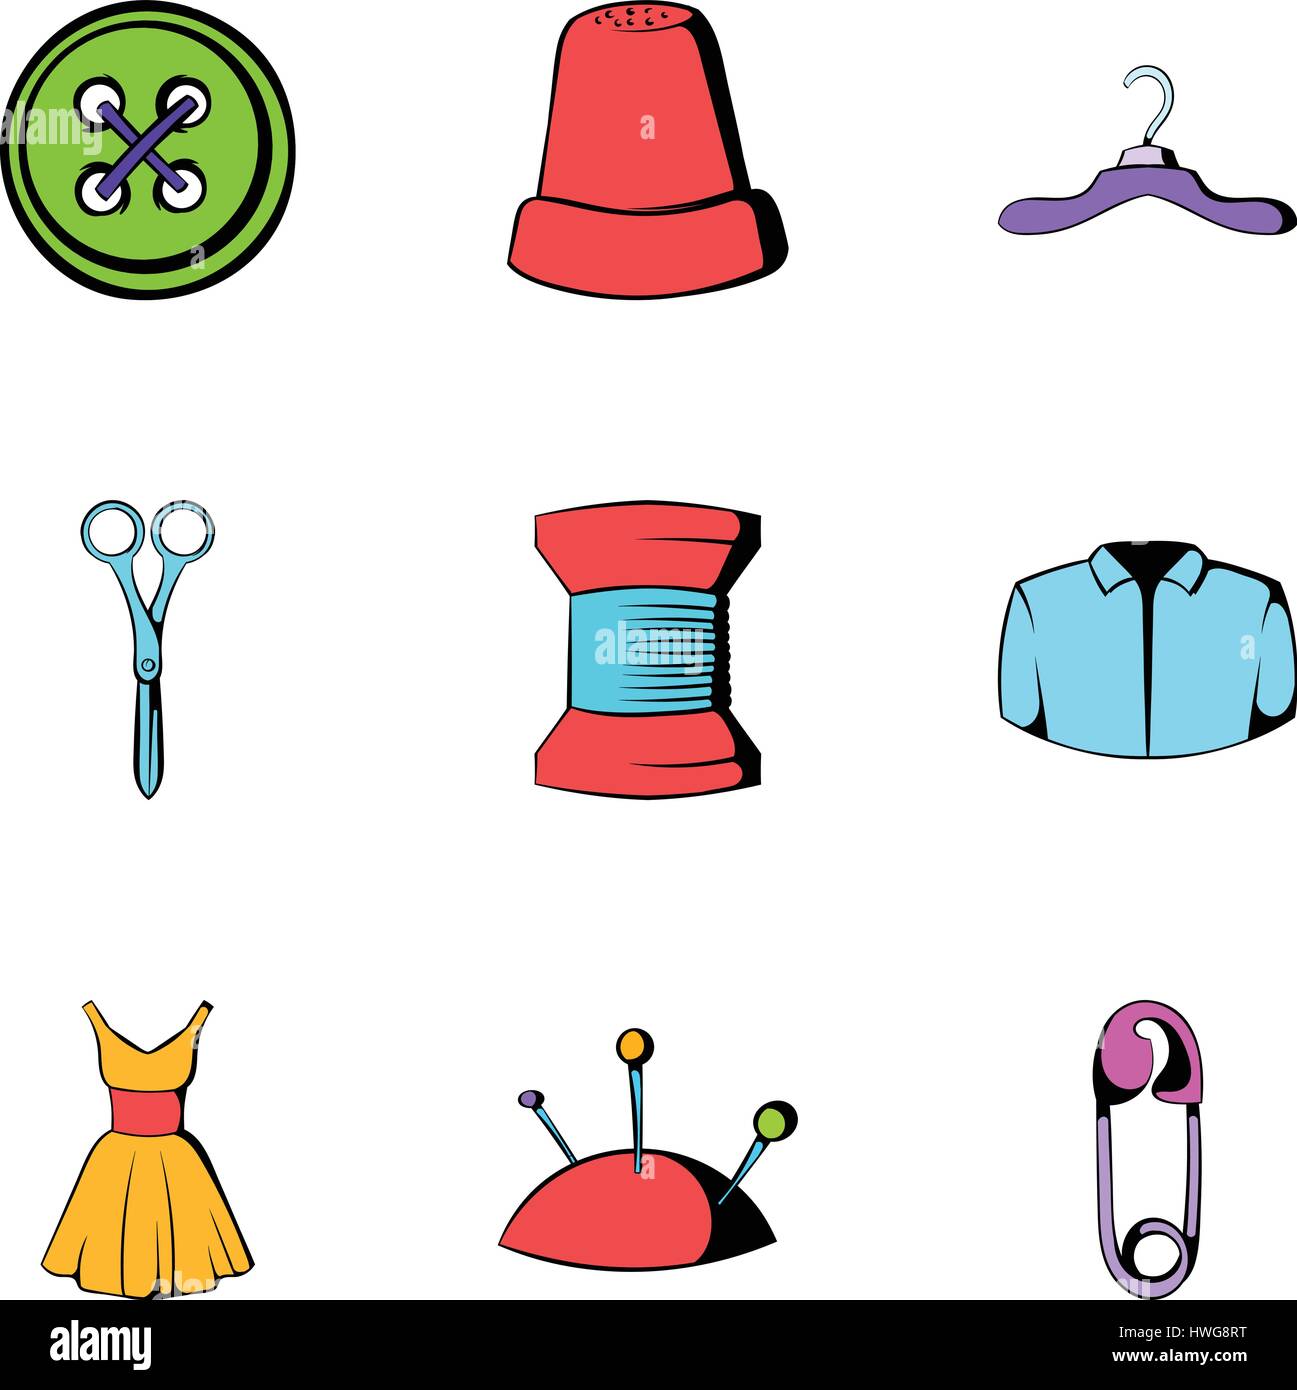 Sewing Cloth Cartoon Icon Stock Photos & Sewing Cloth Cartoon Icon ...